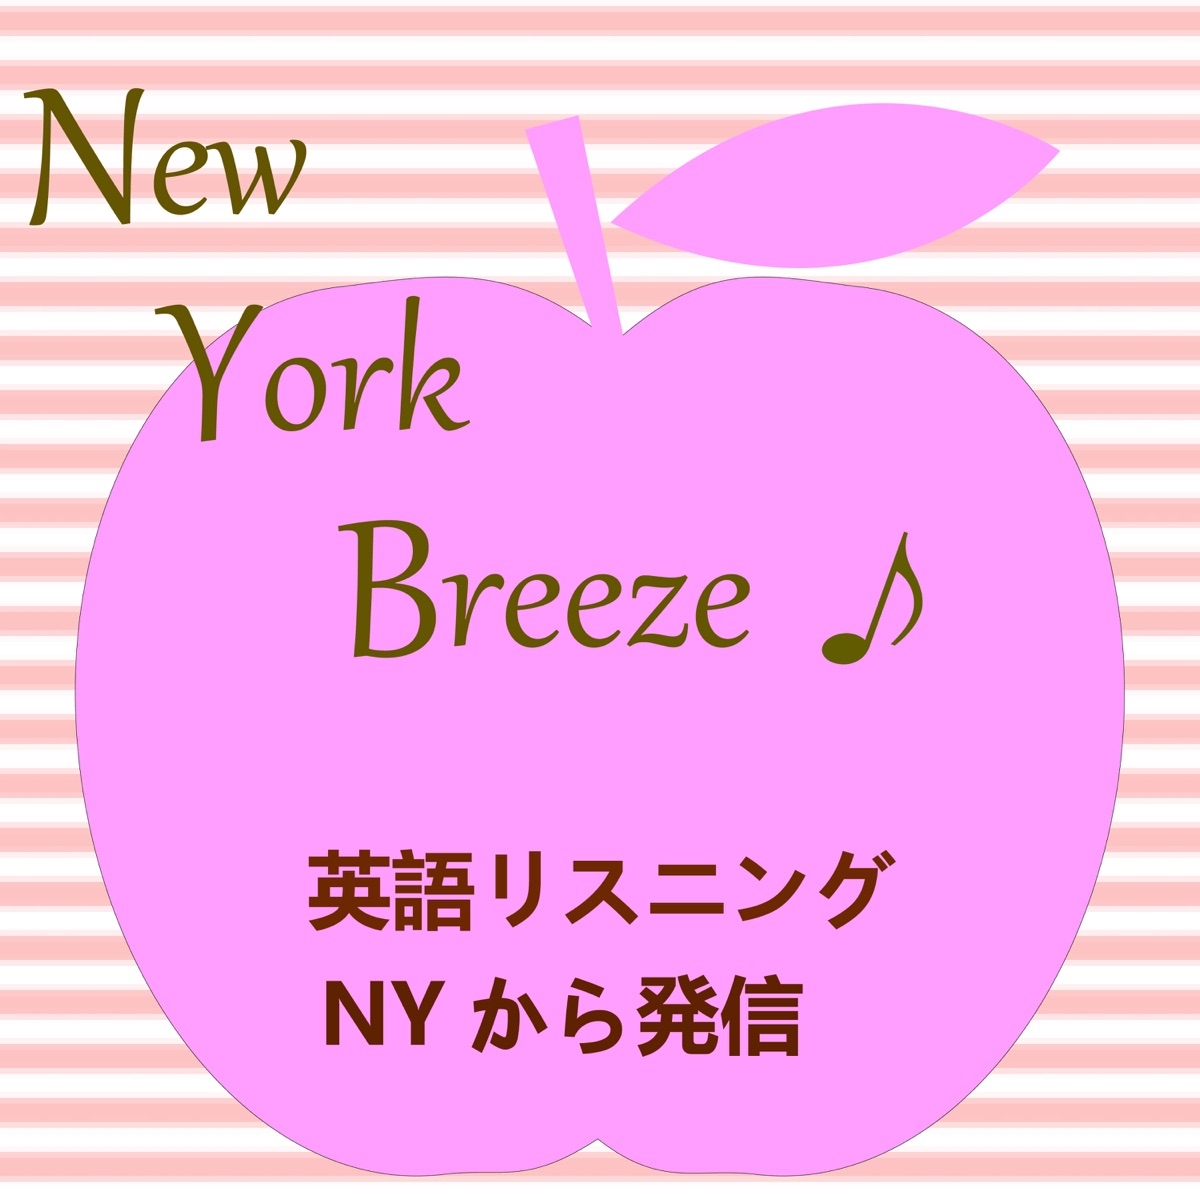 New York Breeze 英語リスニングnyから発信 Podcast Podtail